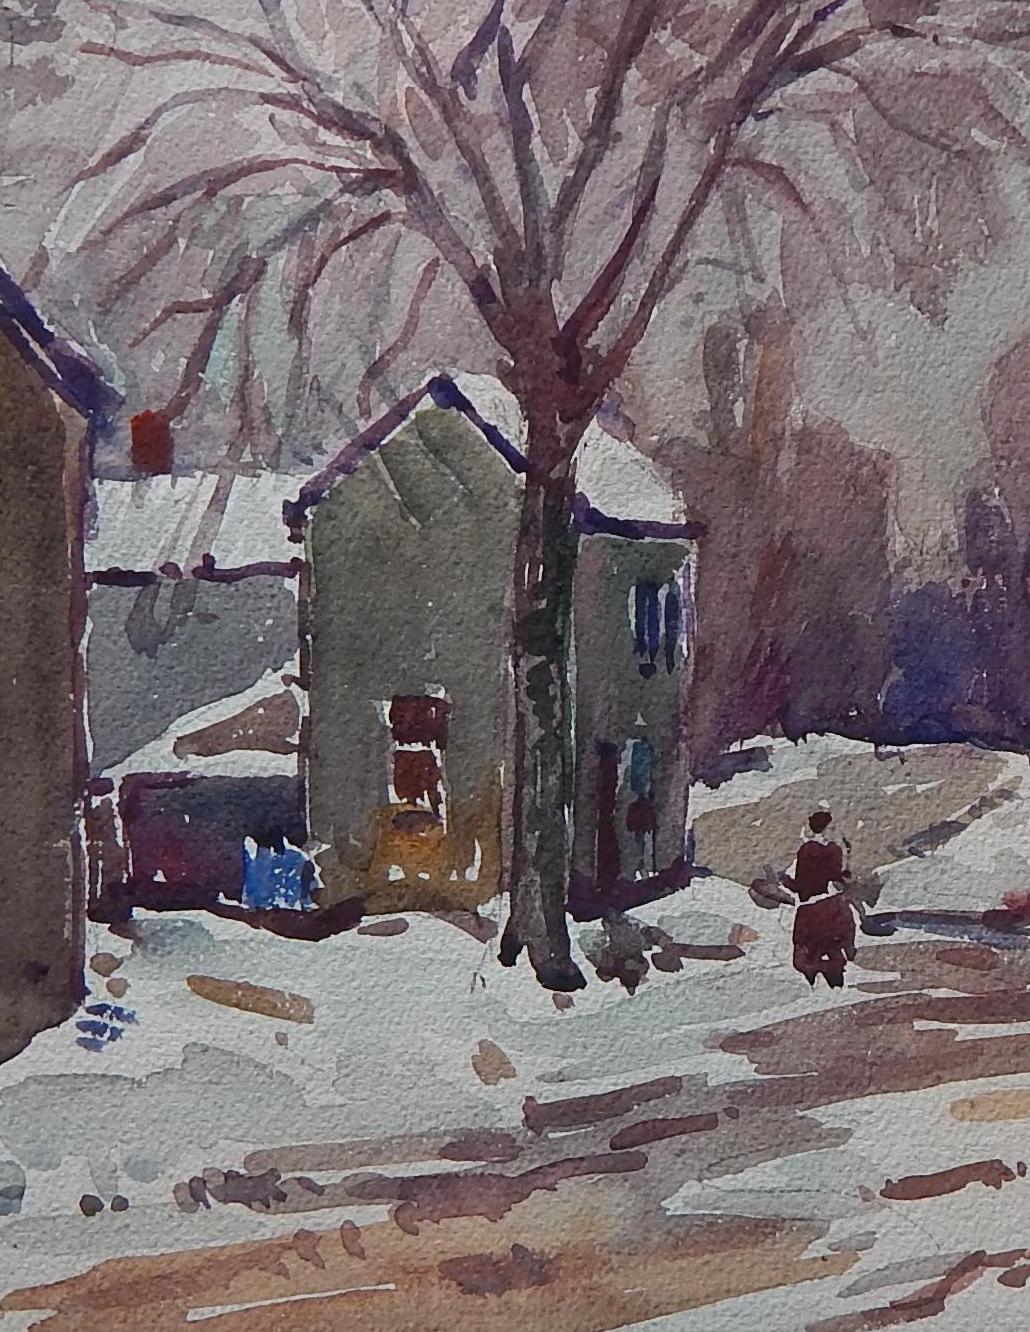 20th Century William Lester Stevens Watercolor, circa 1920s-1930s New England Village in Snow